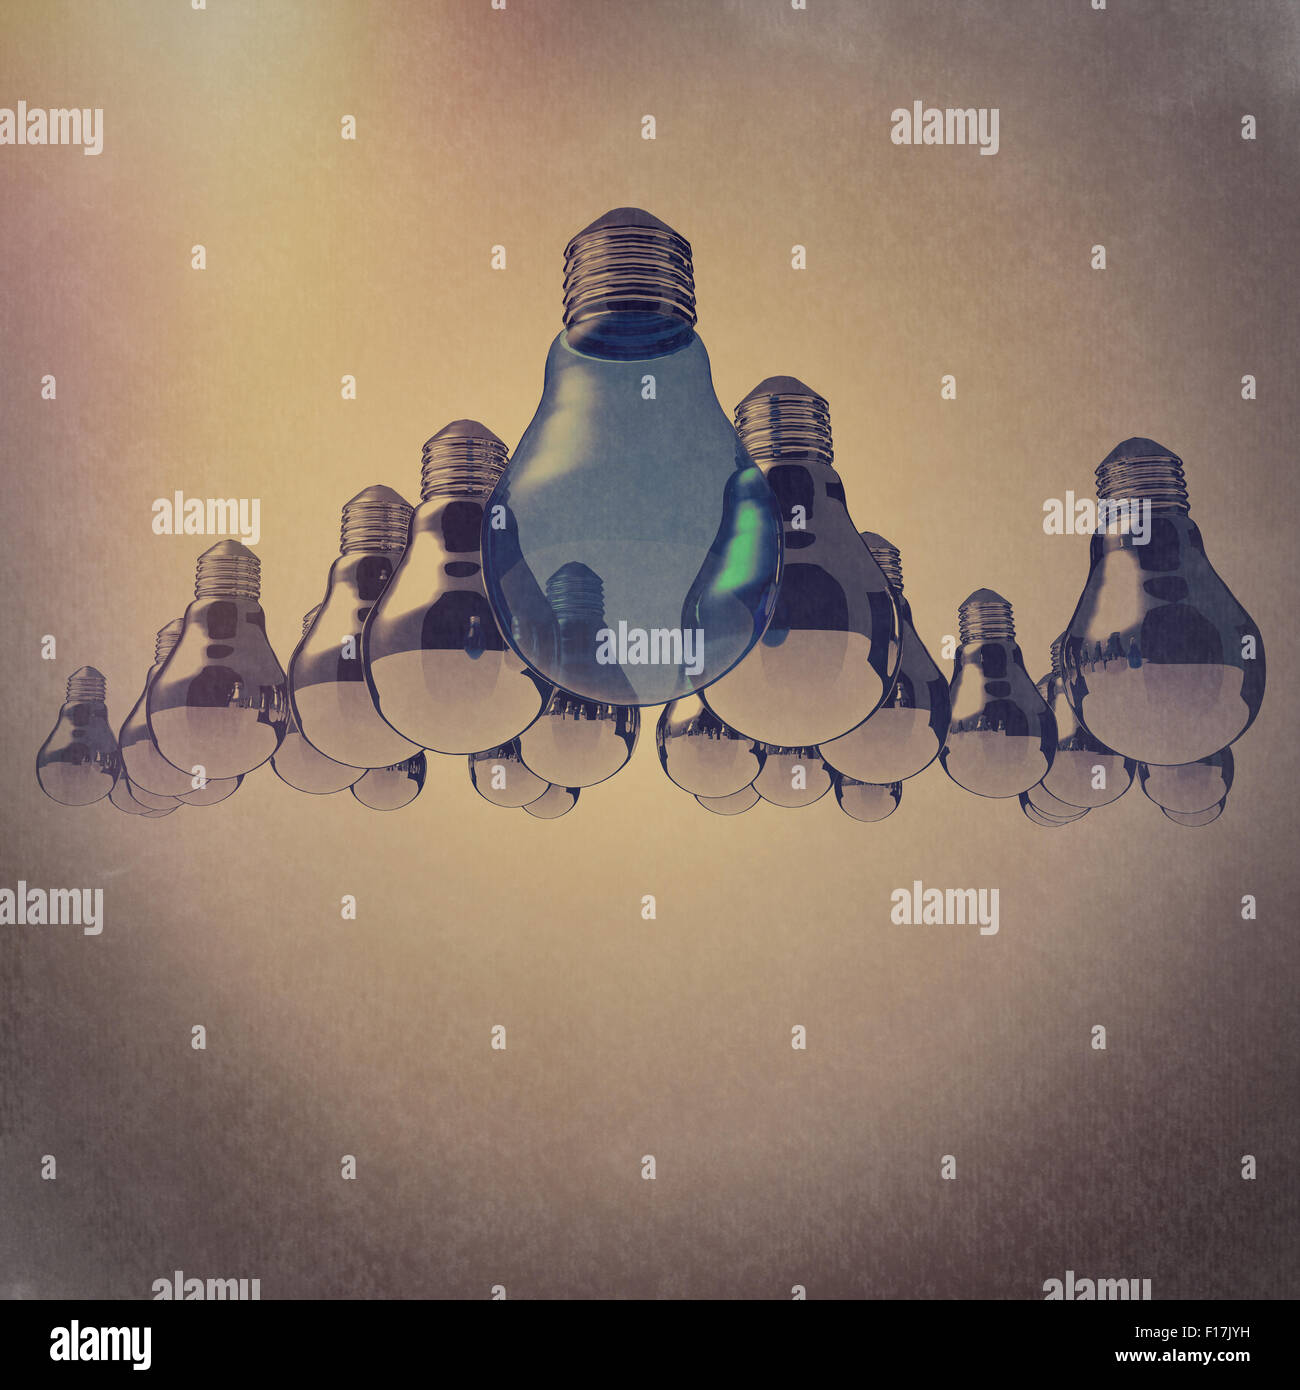 light bulb 3d as leadership vintage style concept Stock Photo